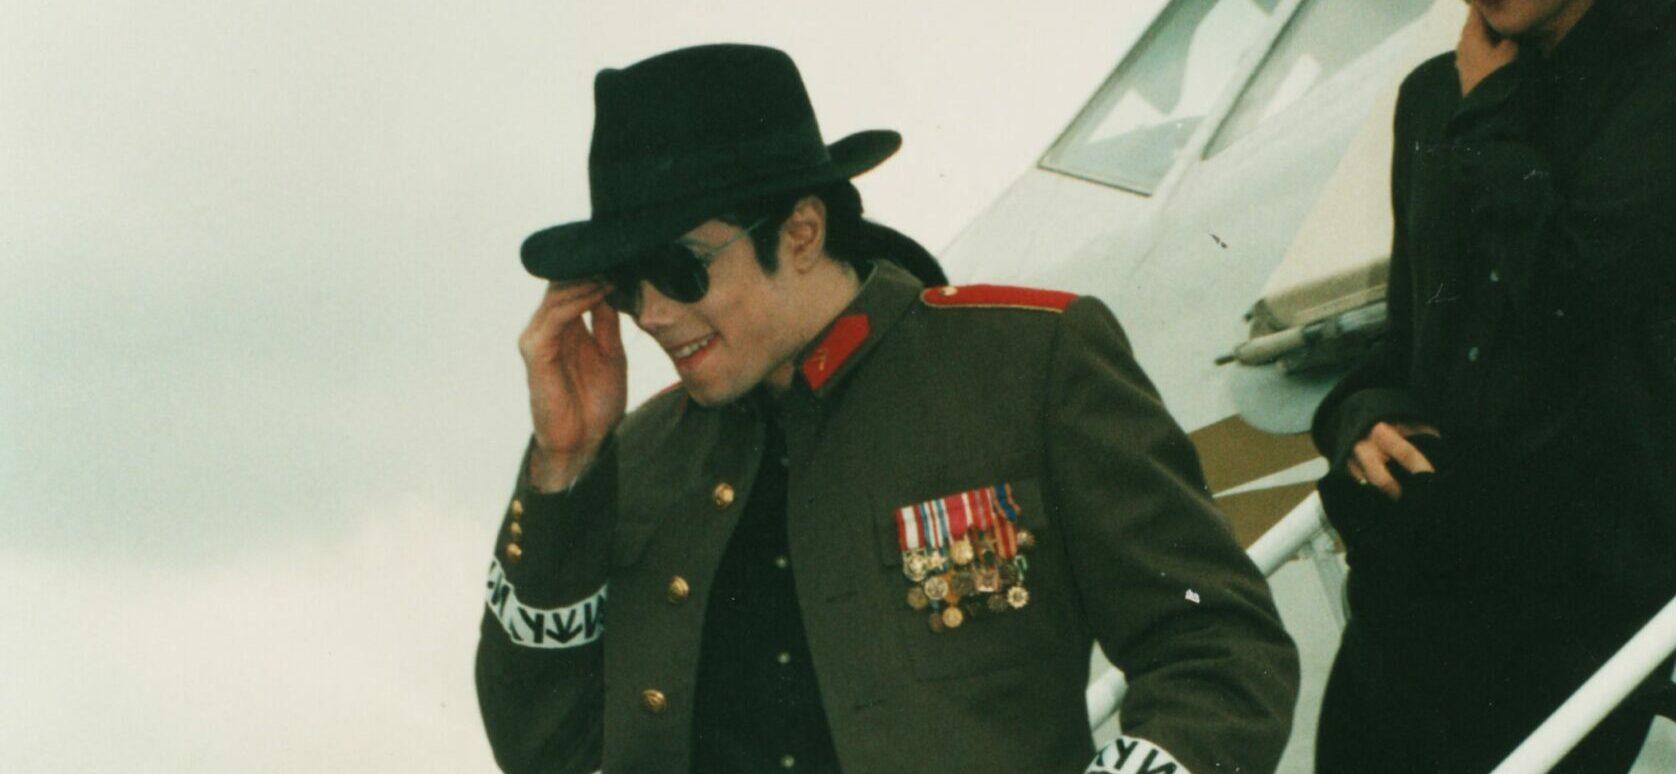 Michael Jackson and his wife Lisa Marie Presley